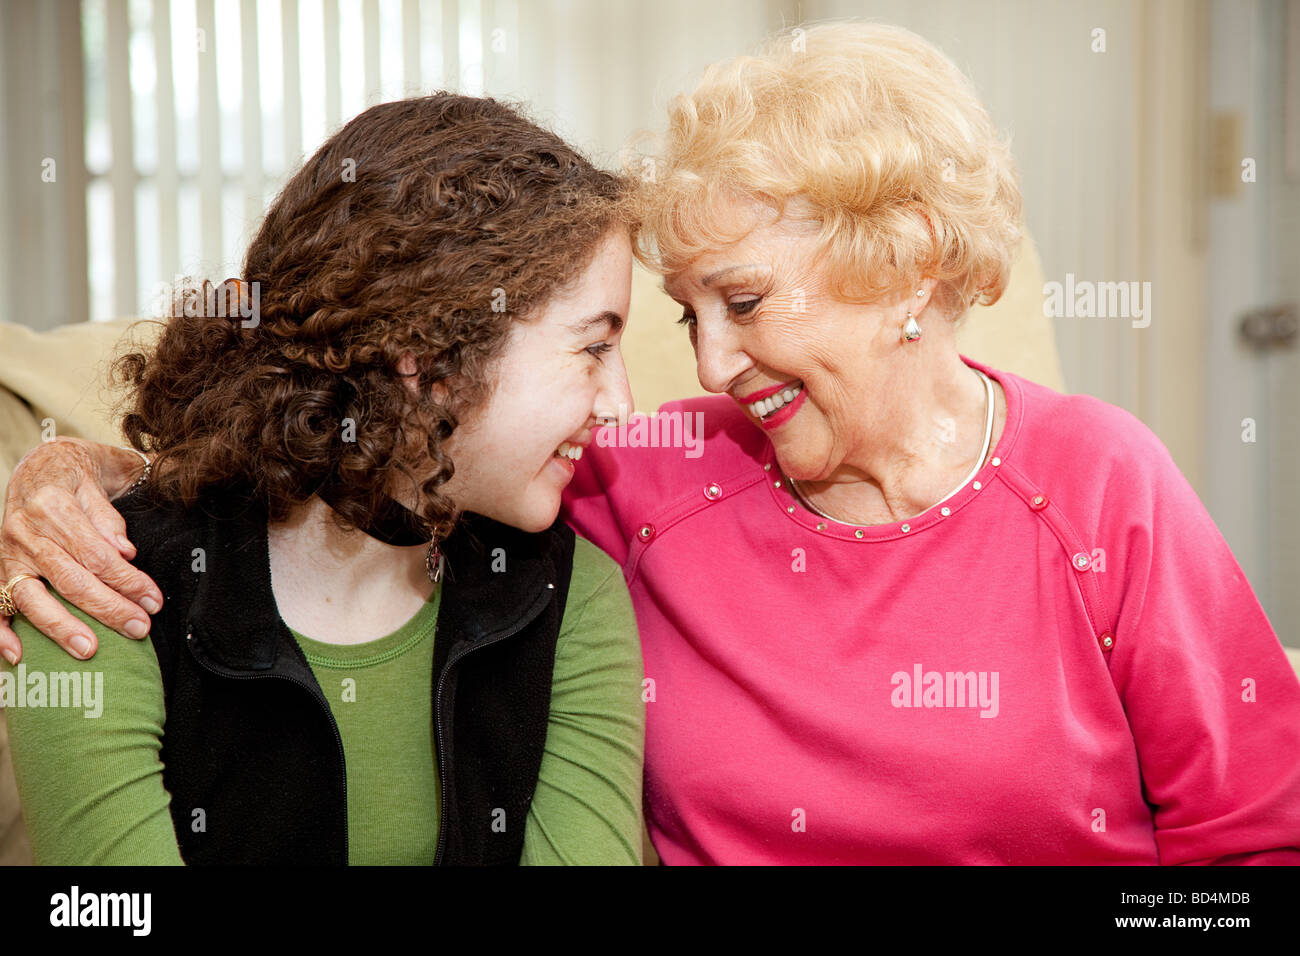 Девушка лижет бабушкам. Общение с бабушкой. Бабушки вместе. Разговор бабушки и внучки. Общение подросток и бабушка.